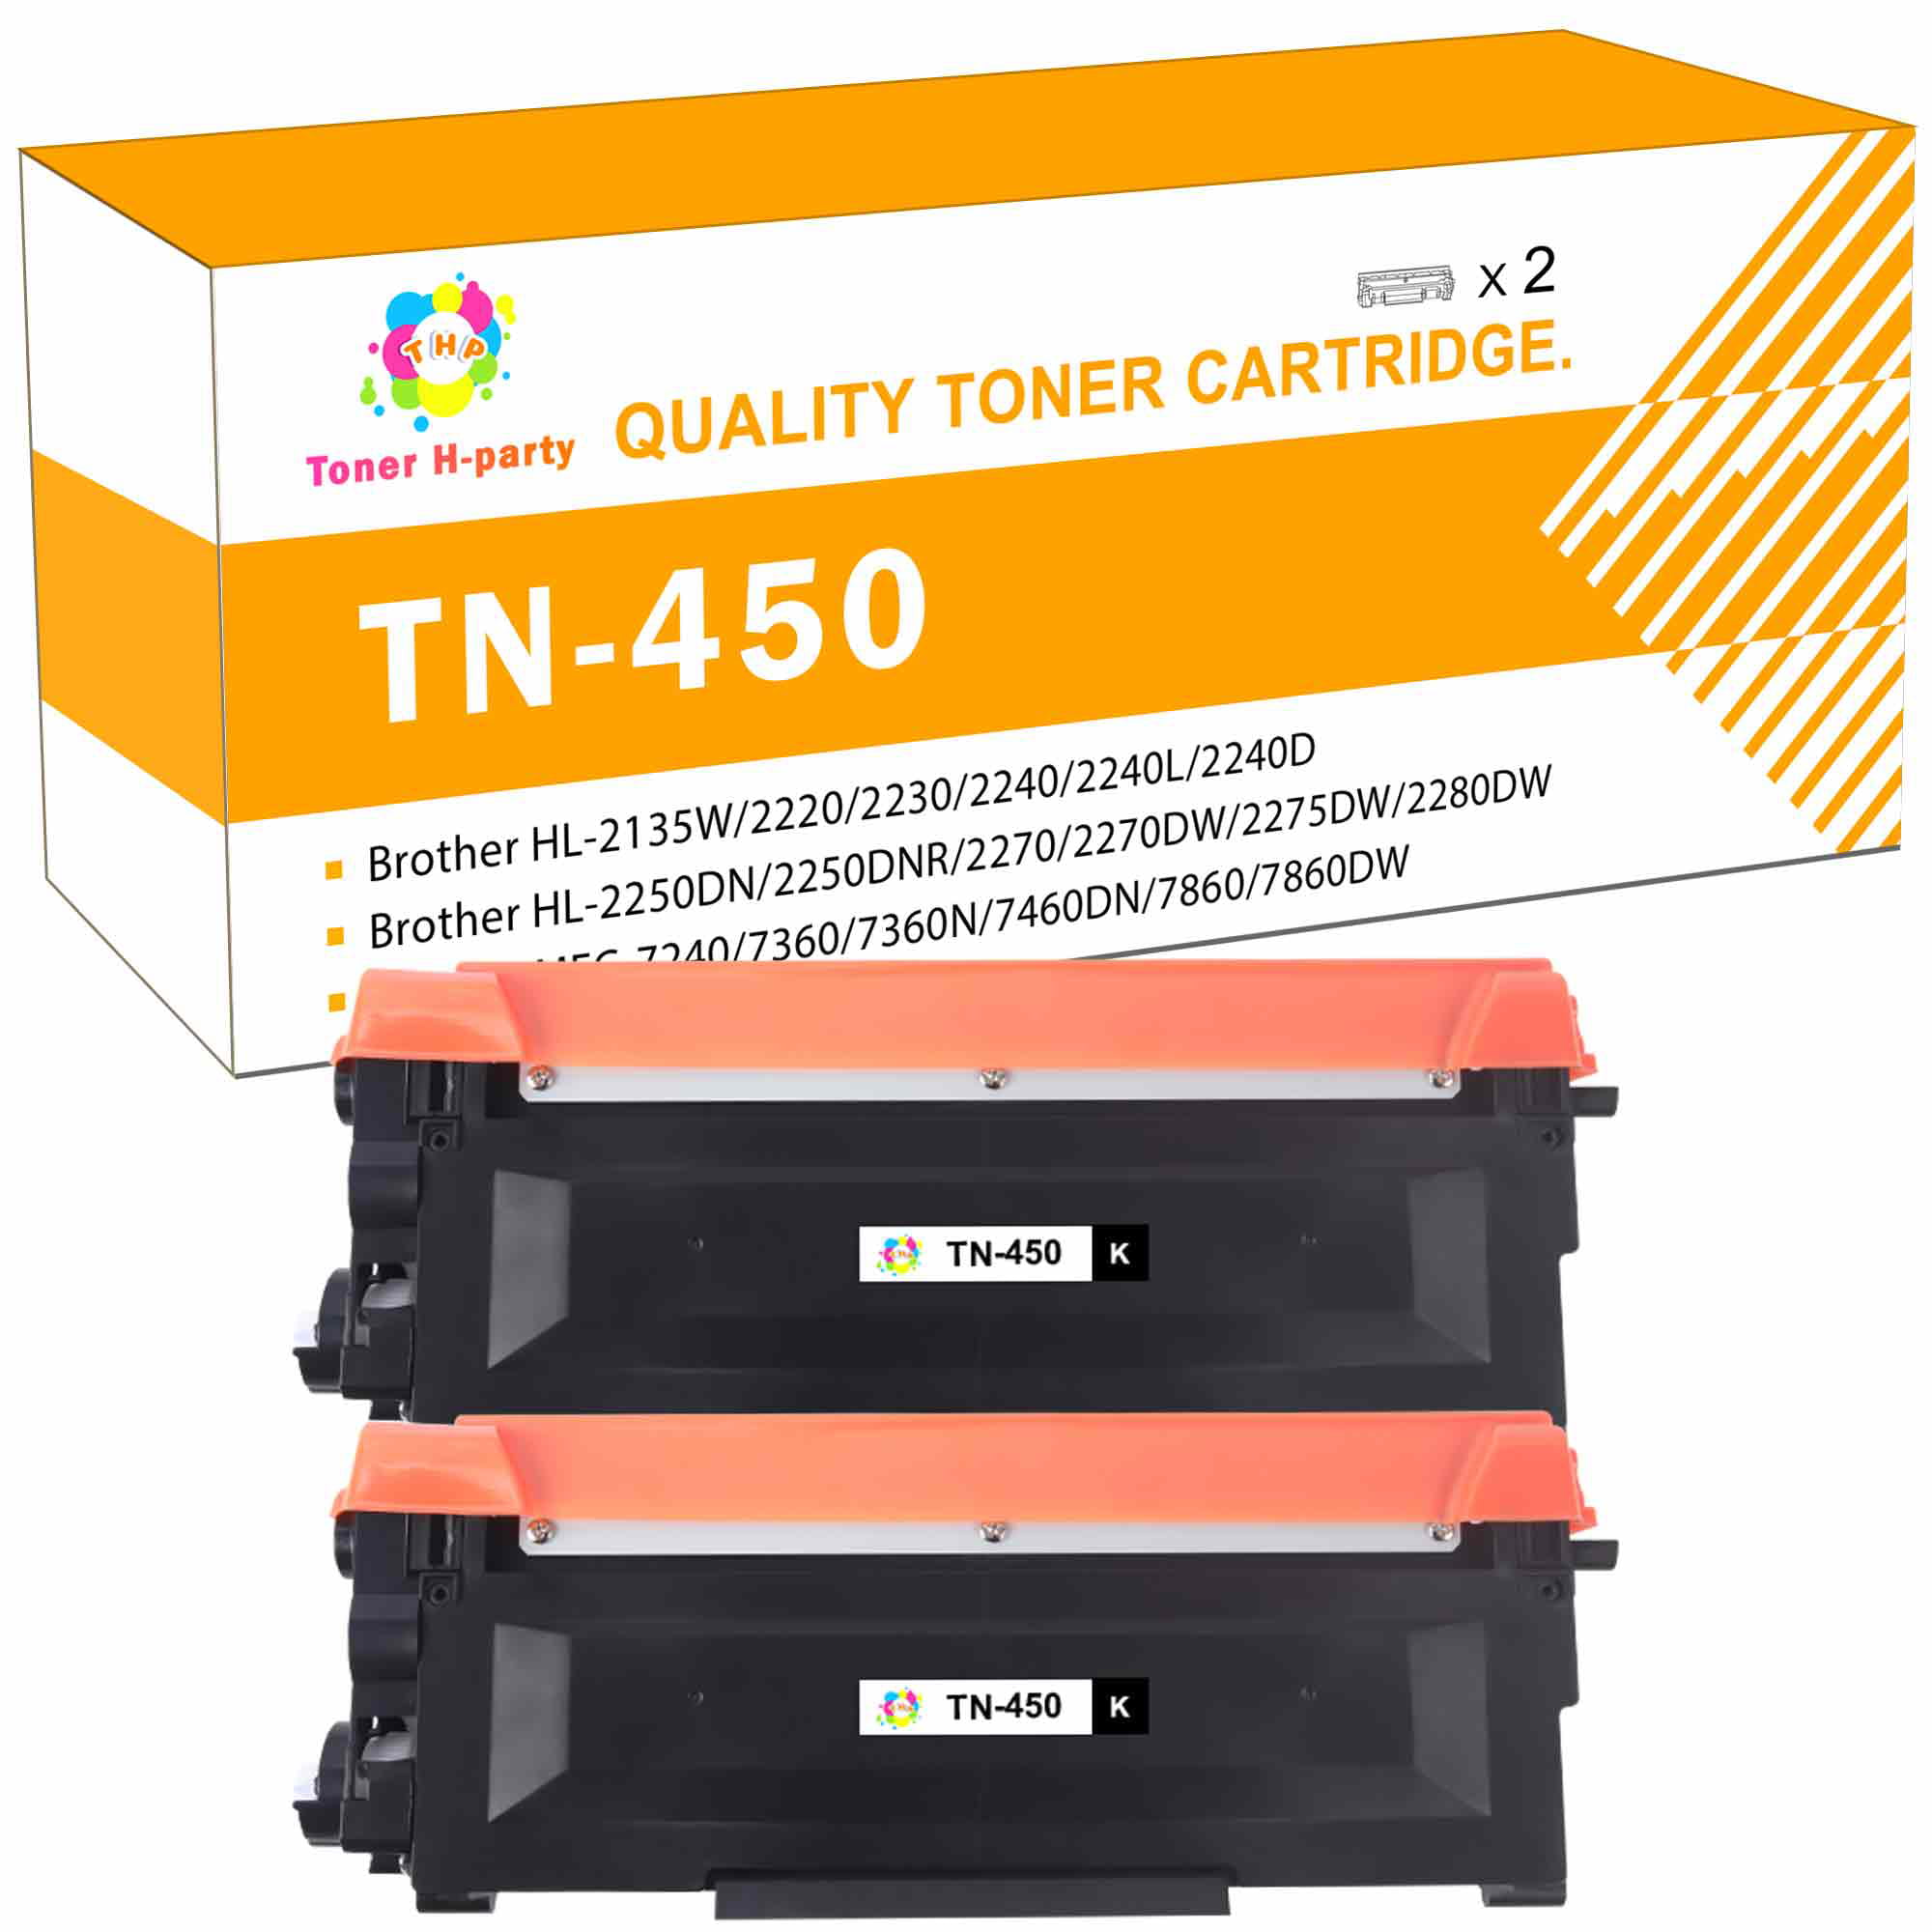 Toner H-Party Compatible Cartridge for Brother TN-450 TN-420 DCP-7055 DCP-7055W HL-2220 HL-2230 MFC-7360N MFC-7460DN Printer Ink (Black, 2-Pack) - Walmart.com